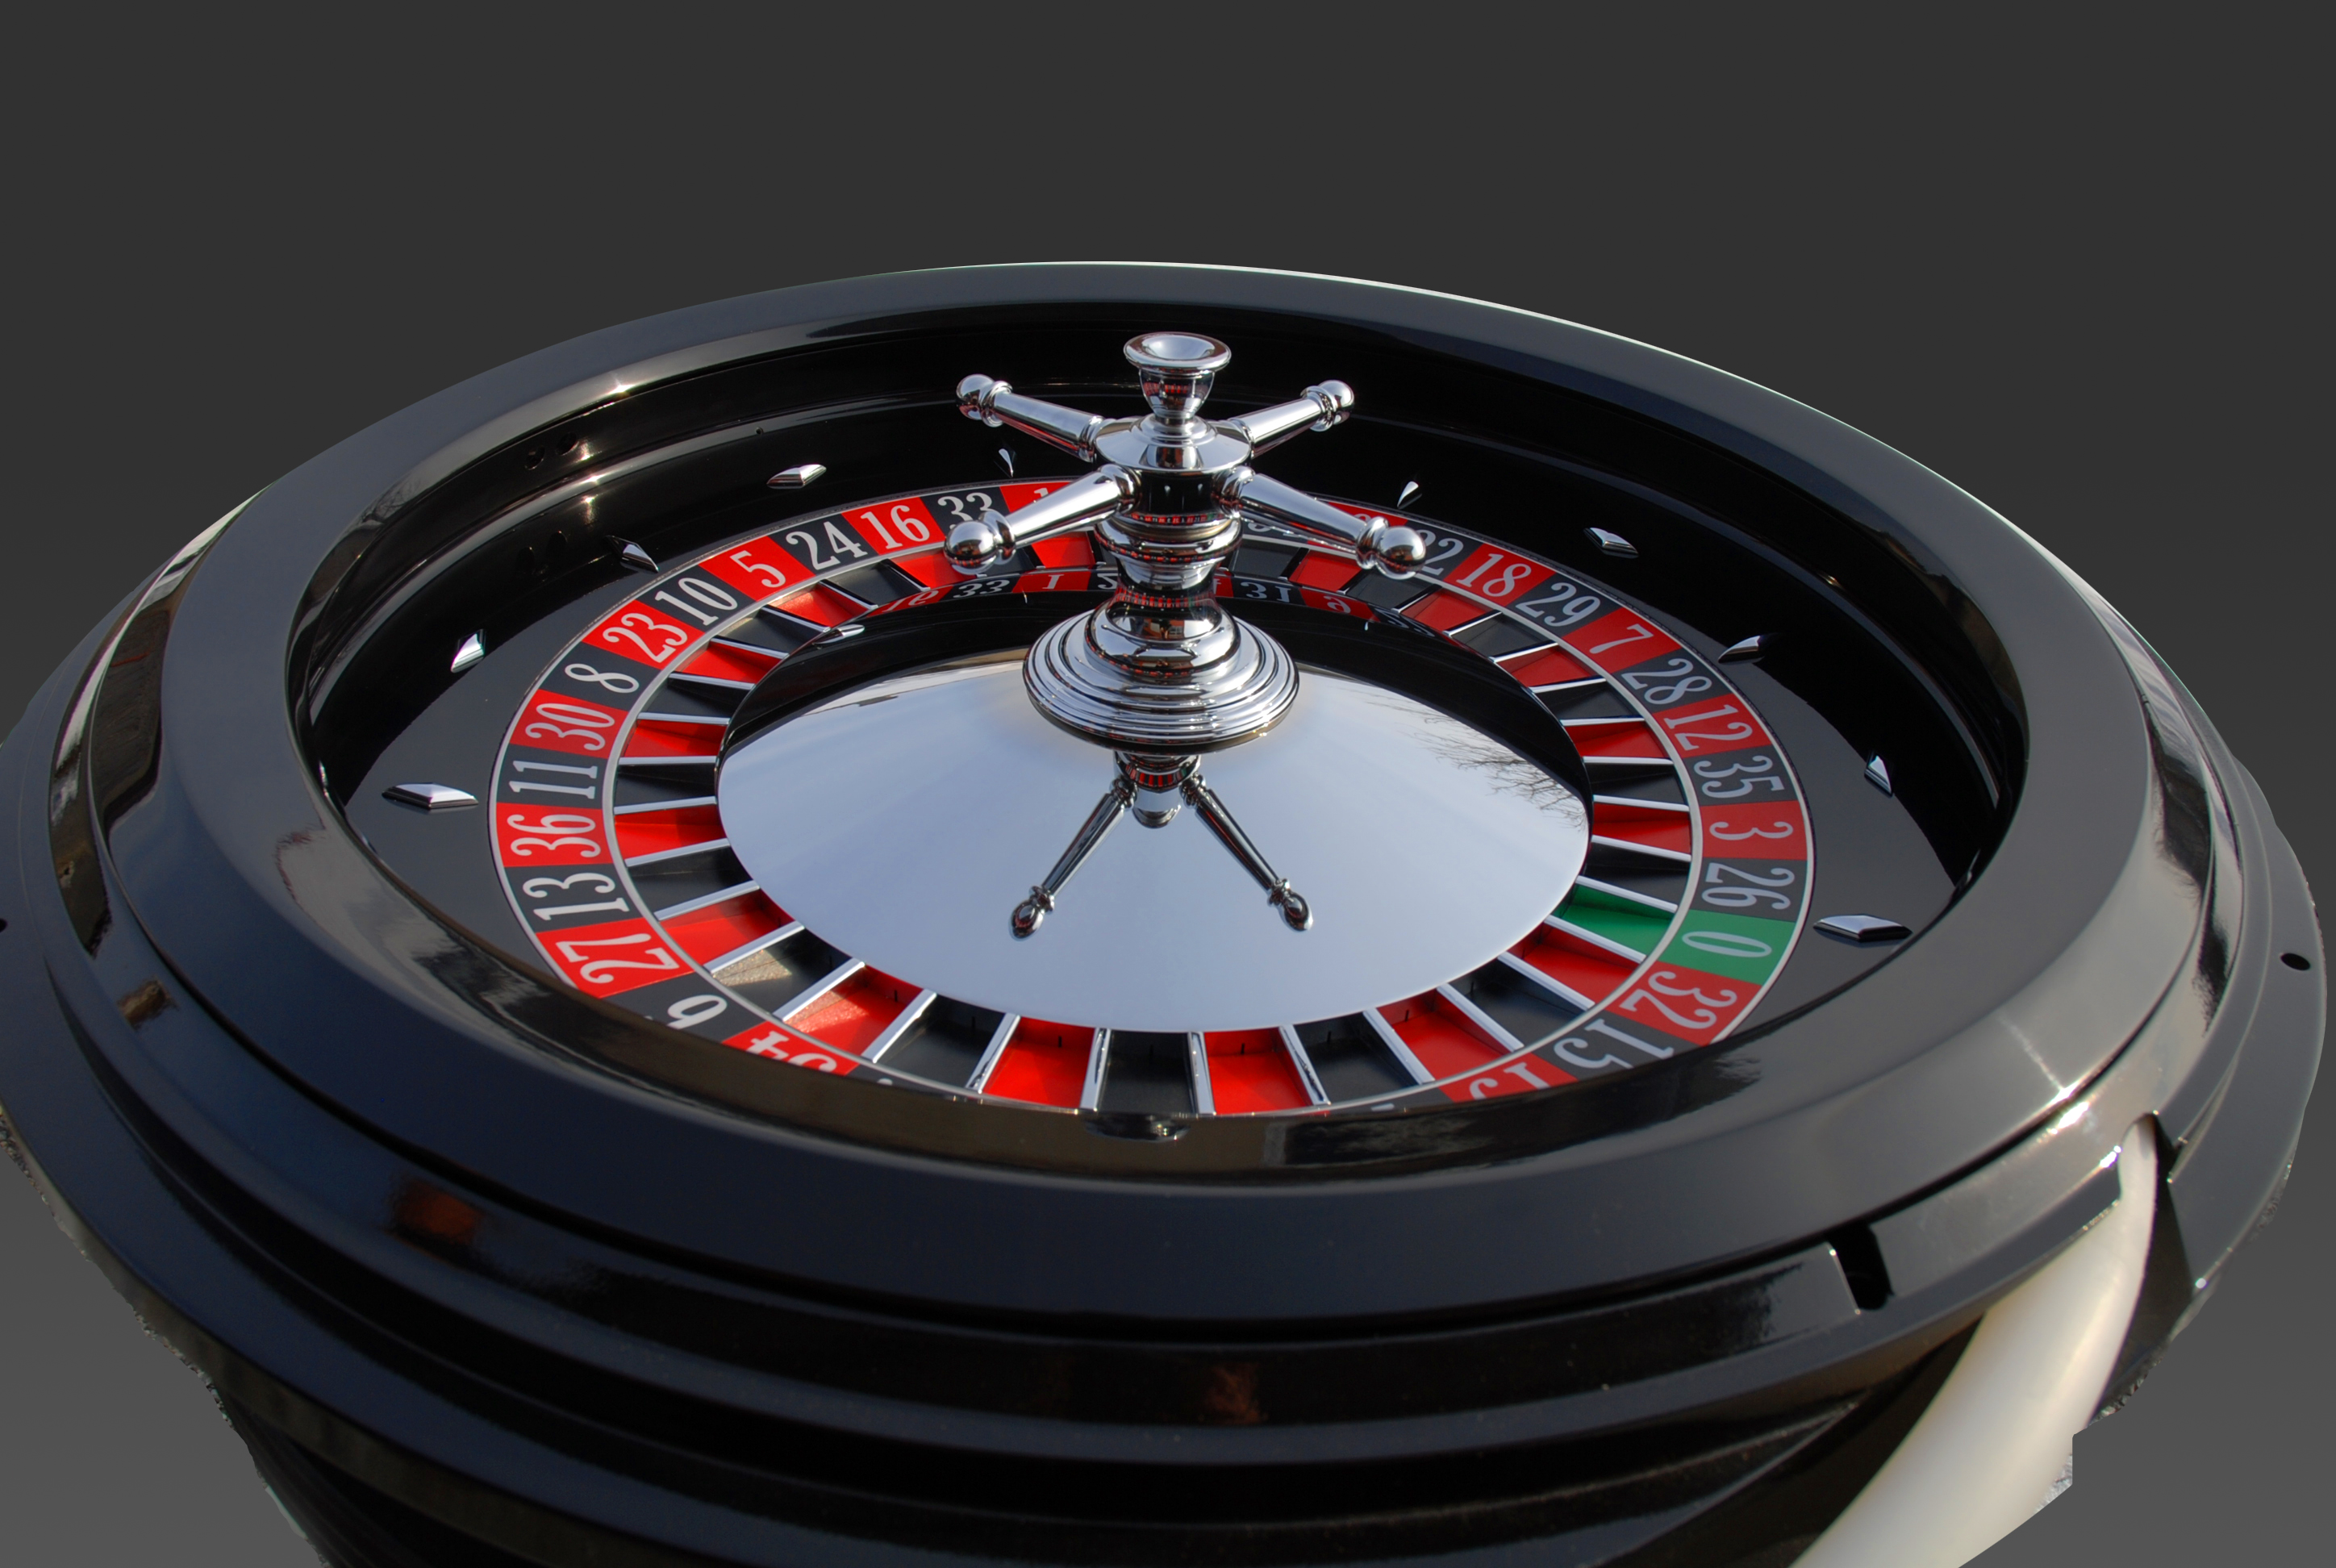 Roulette wheel app